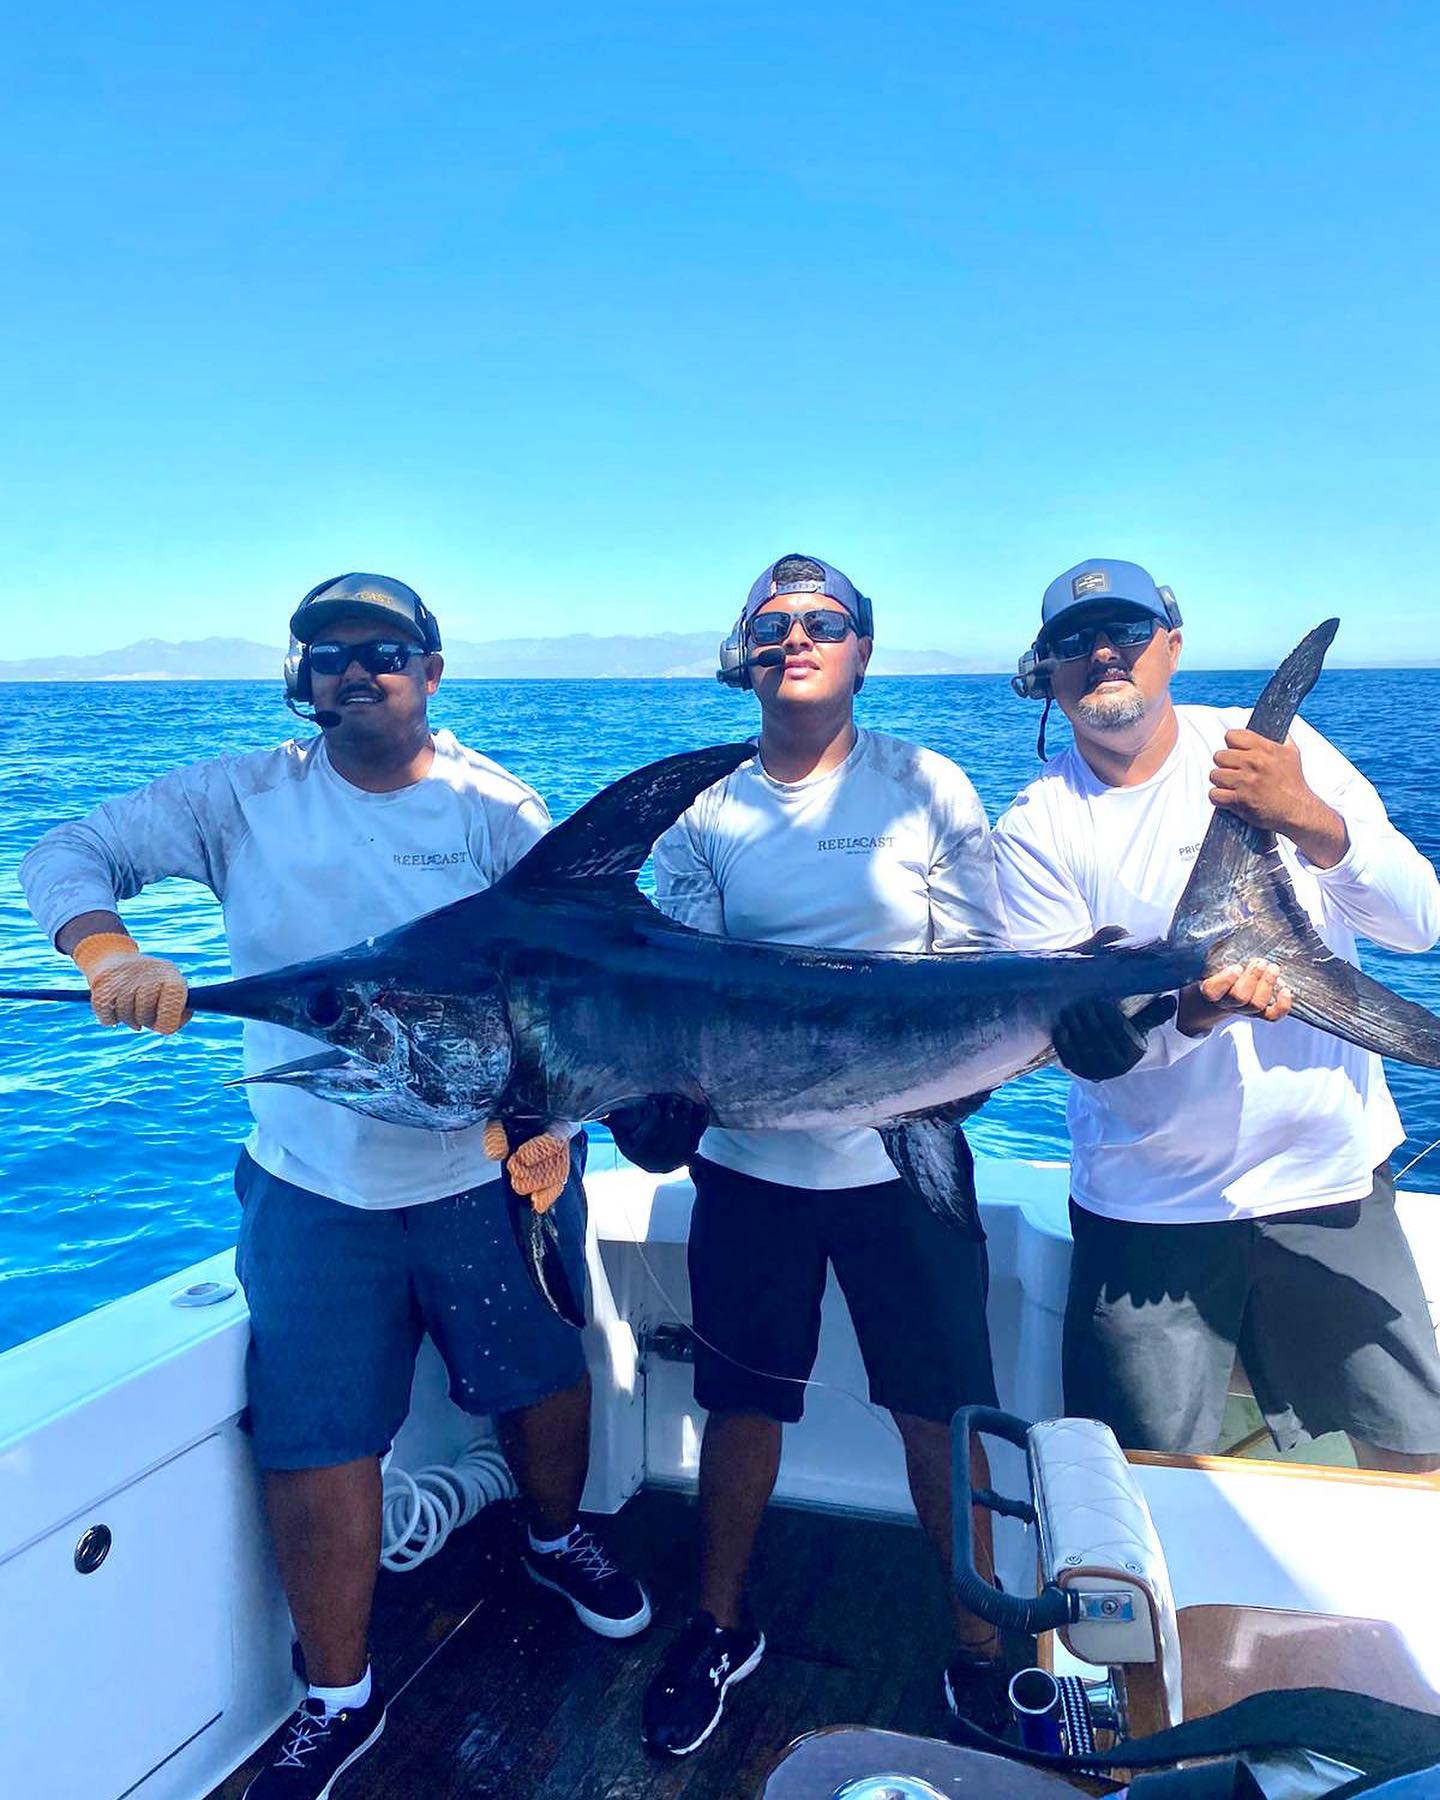 Capt Hiram and crew Javier and Gabriel land this Swordfish